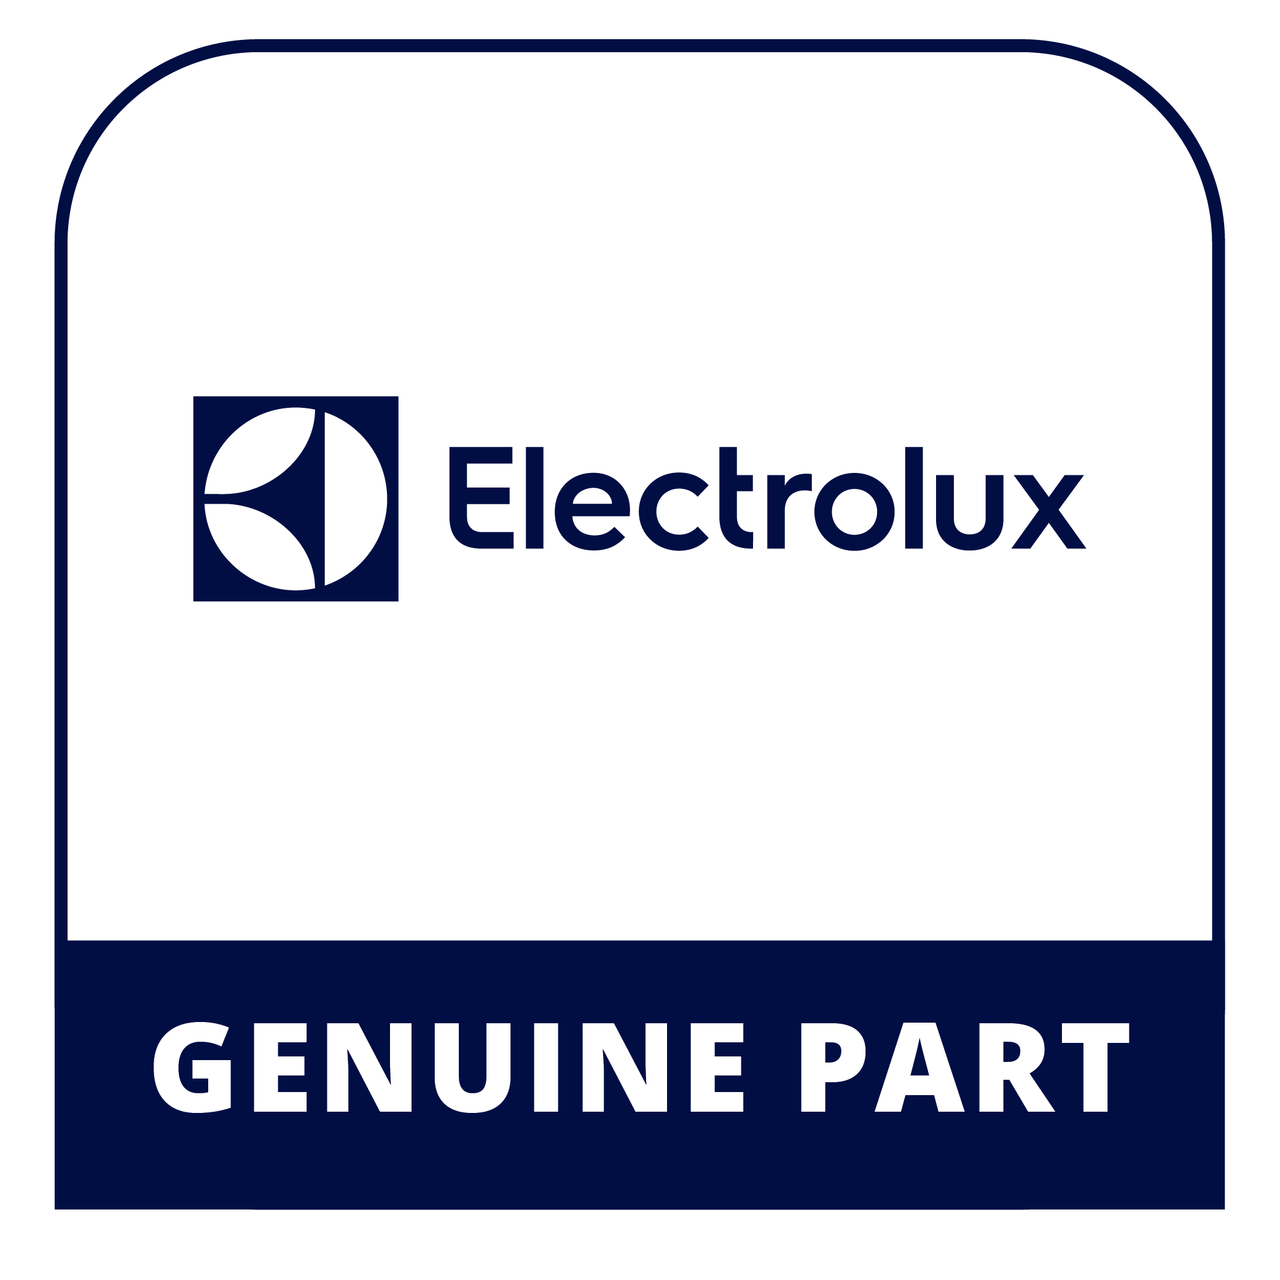 Frigidaire - Electrolux 318905204 Knob - Genuine Electrolux Part